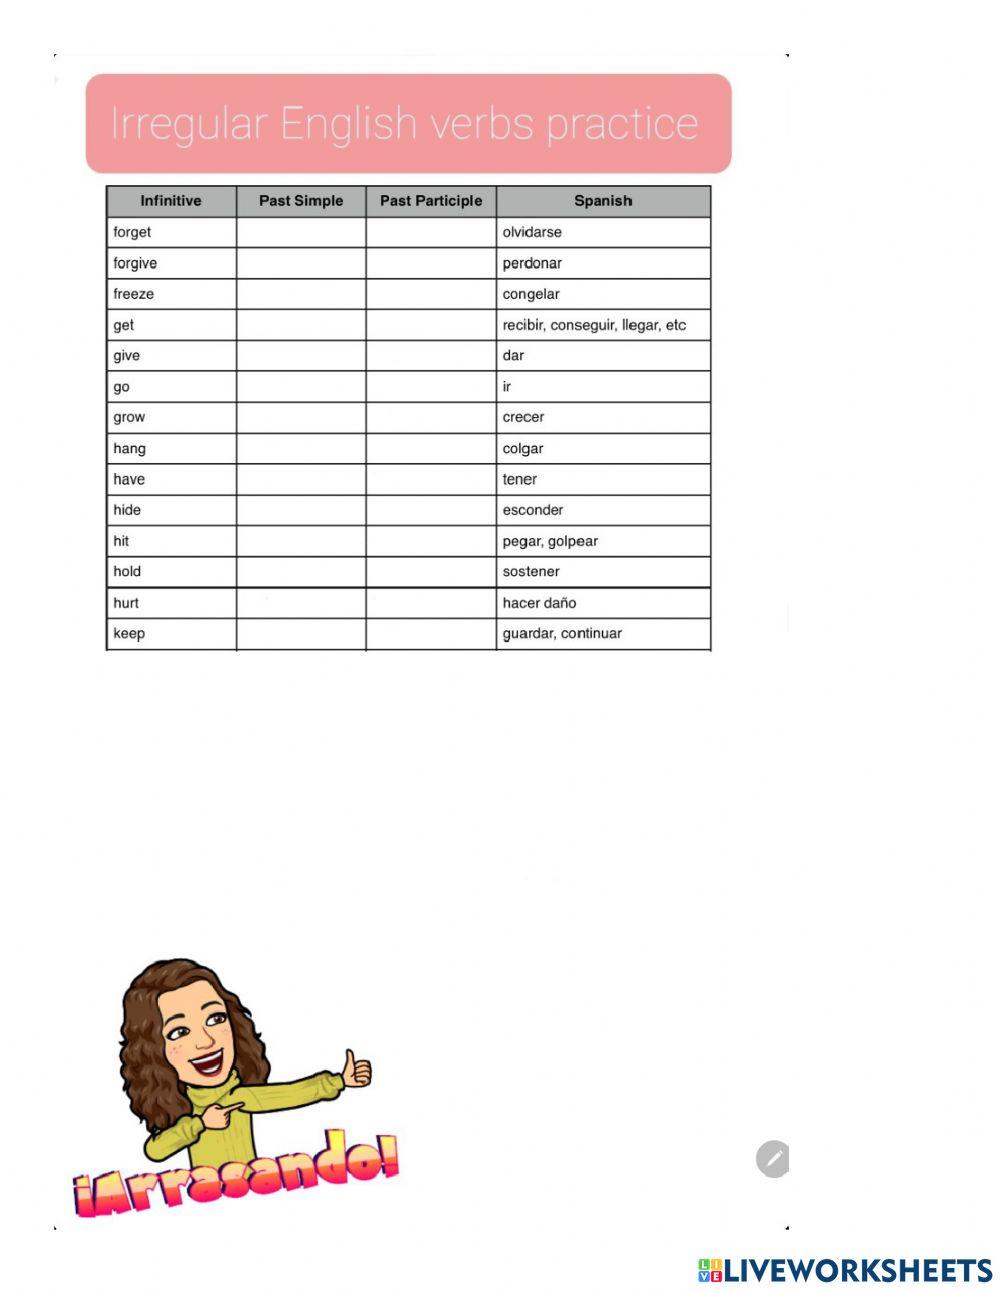 14 irregular verbs in alphabetical order from 2nd list